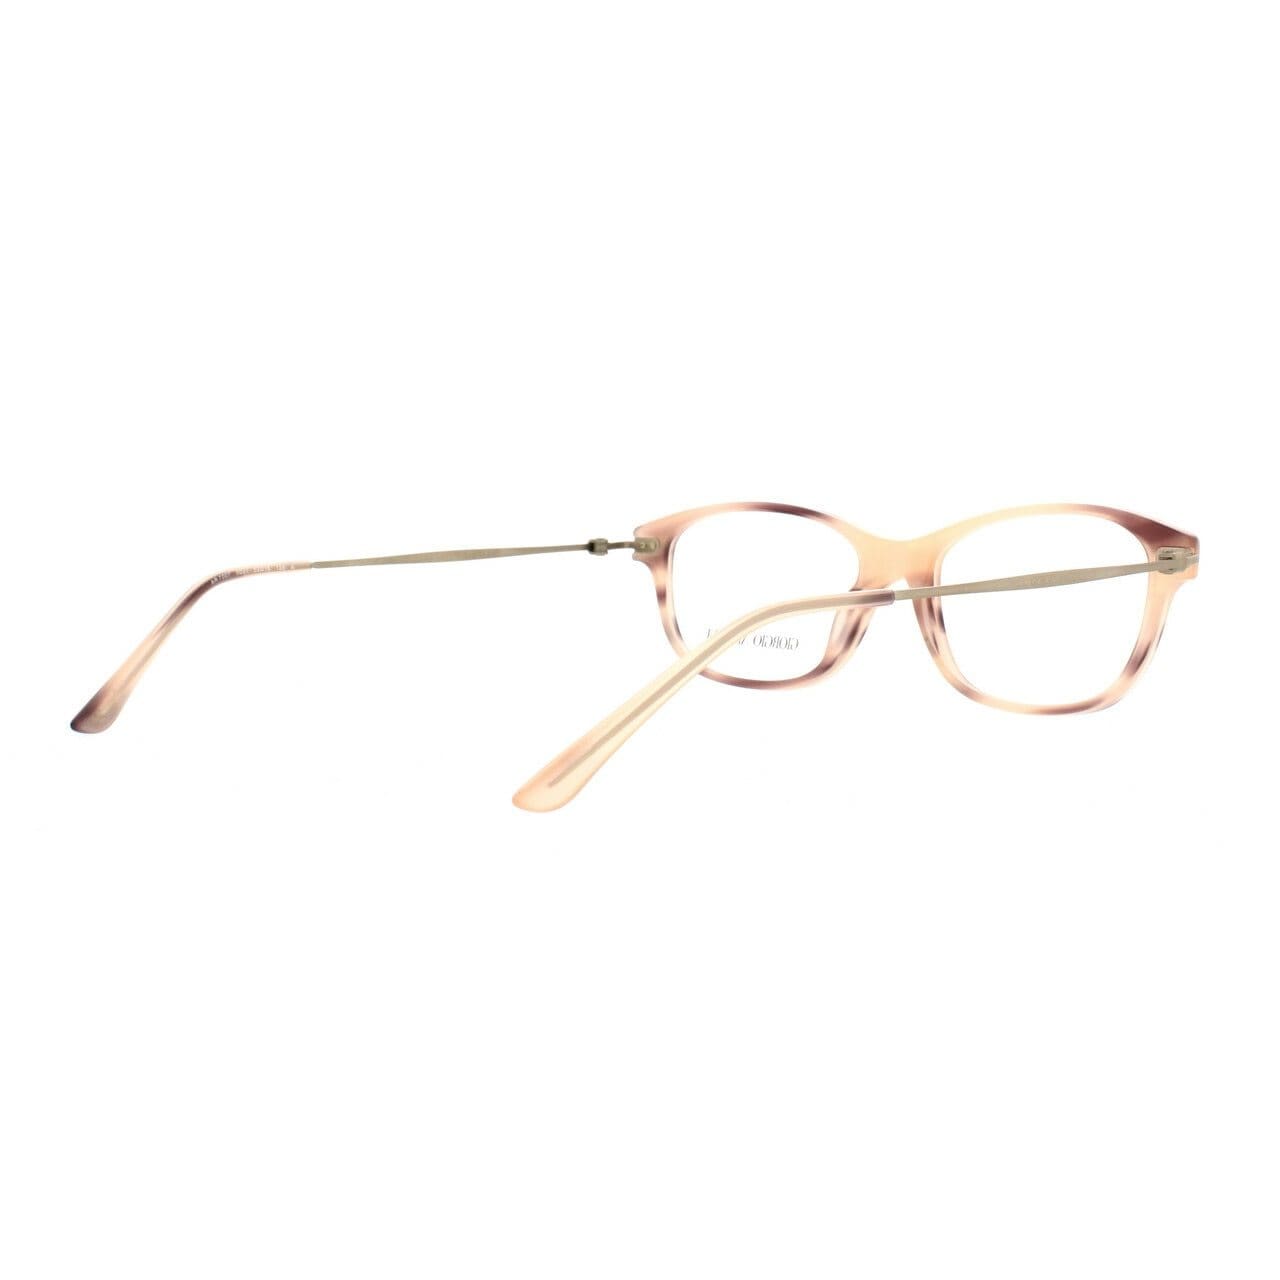 Giorgio Armani AR7007 5021 Striped Pink Rectangular Eyeglasses Frames 8053672032482